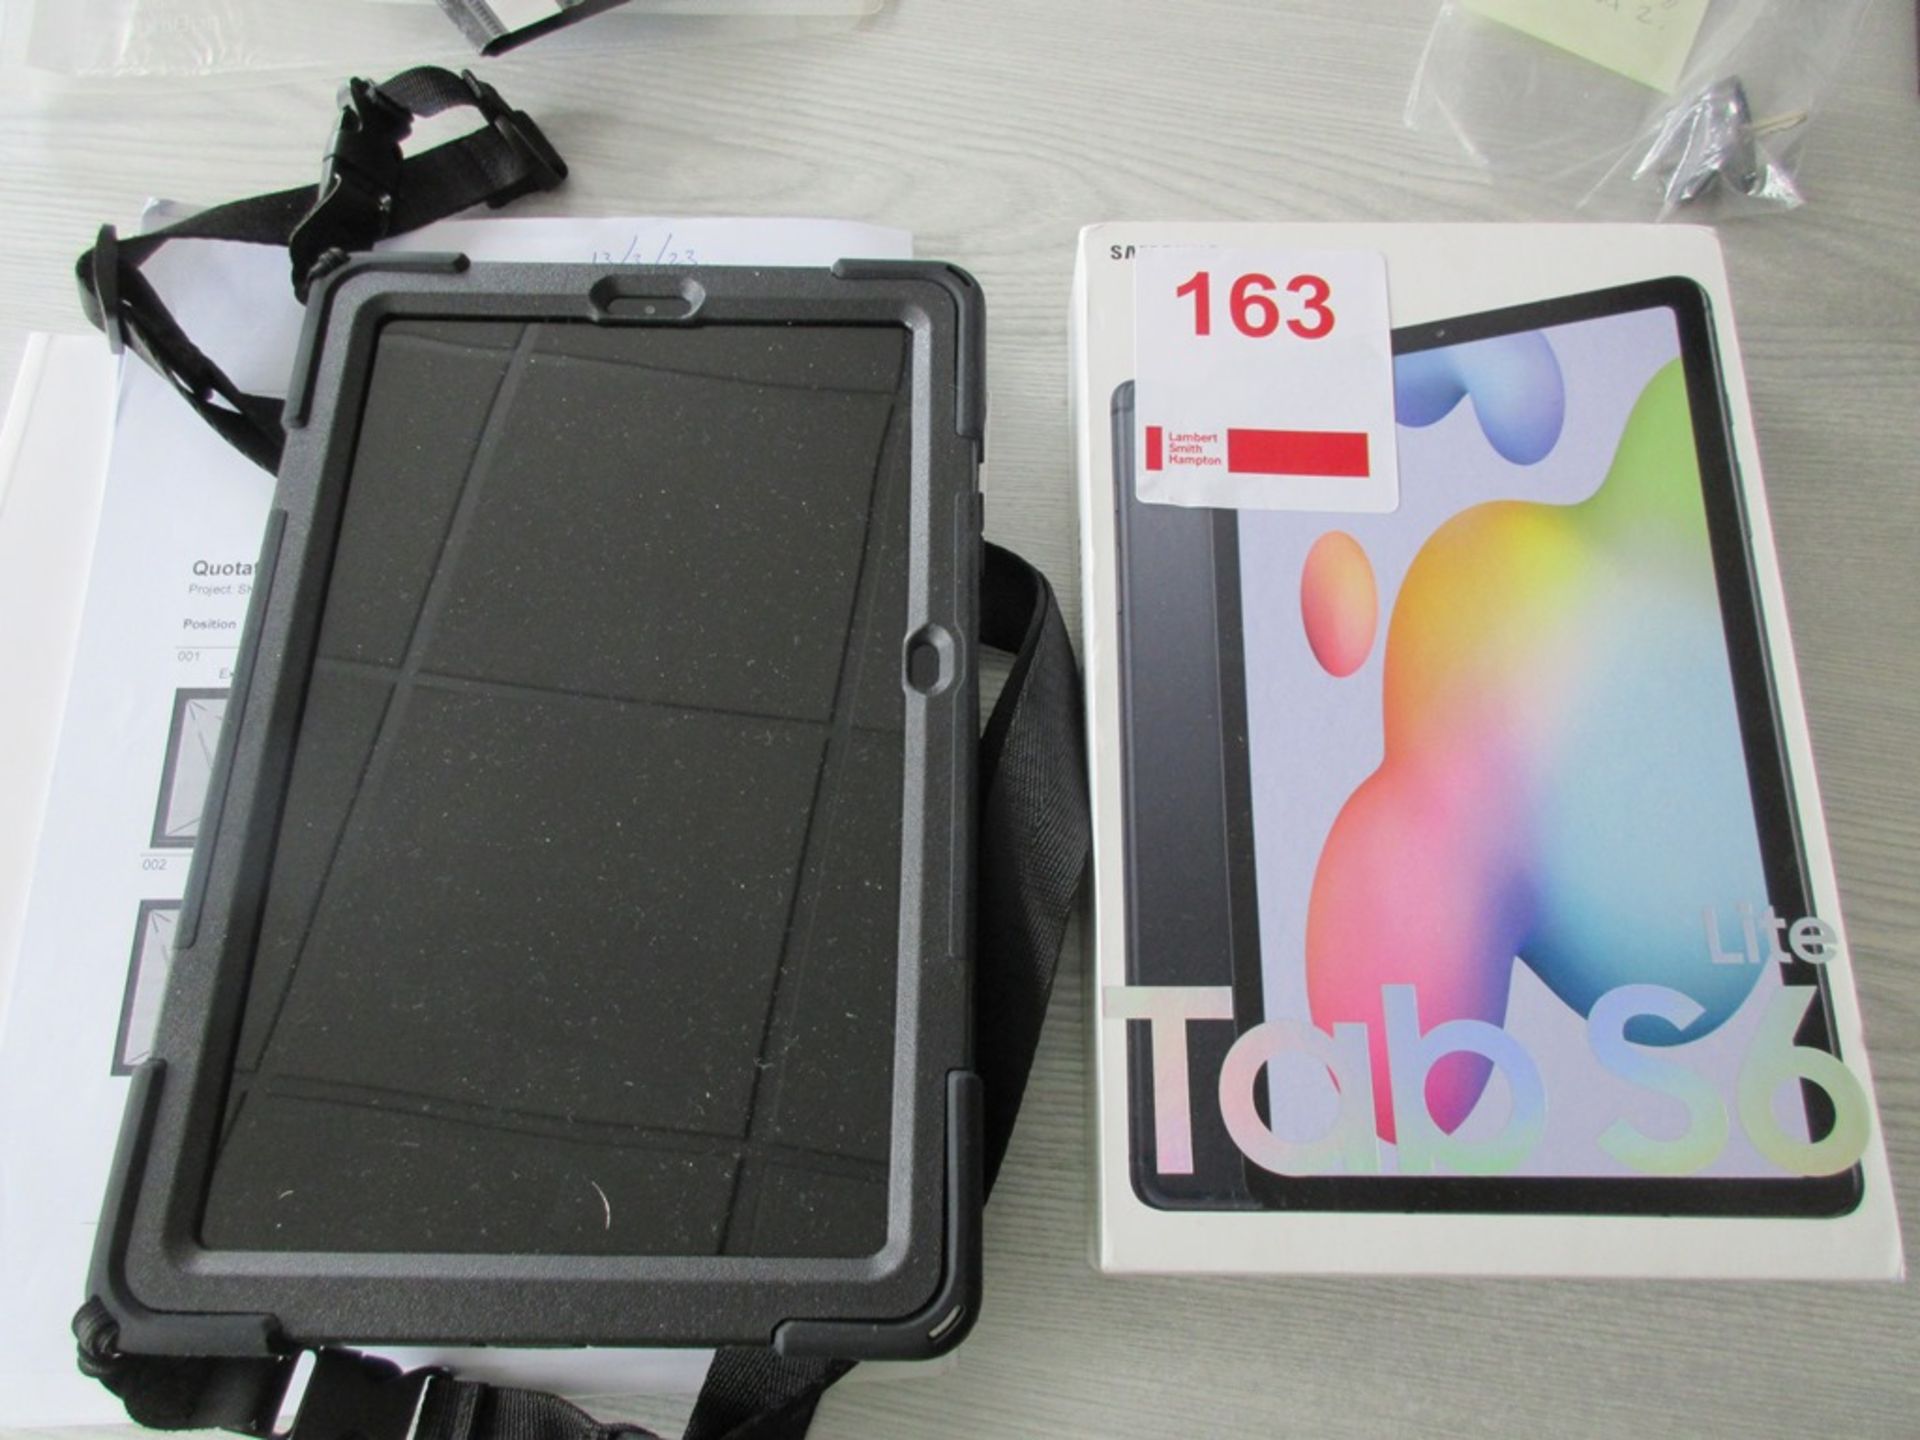 Samsung Lite Tab S6 Tablet